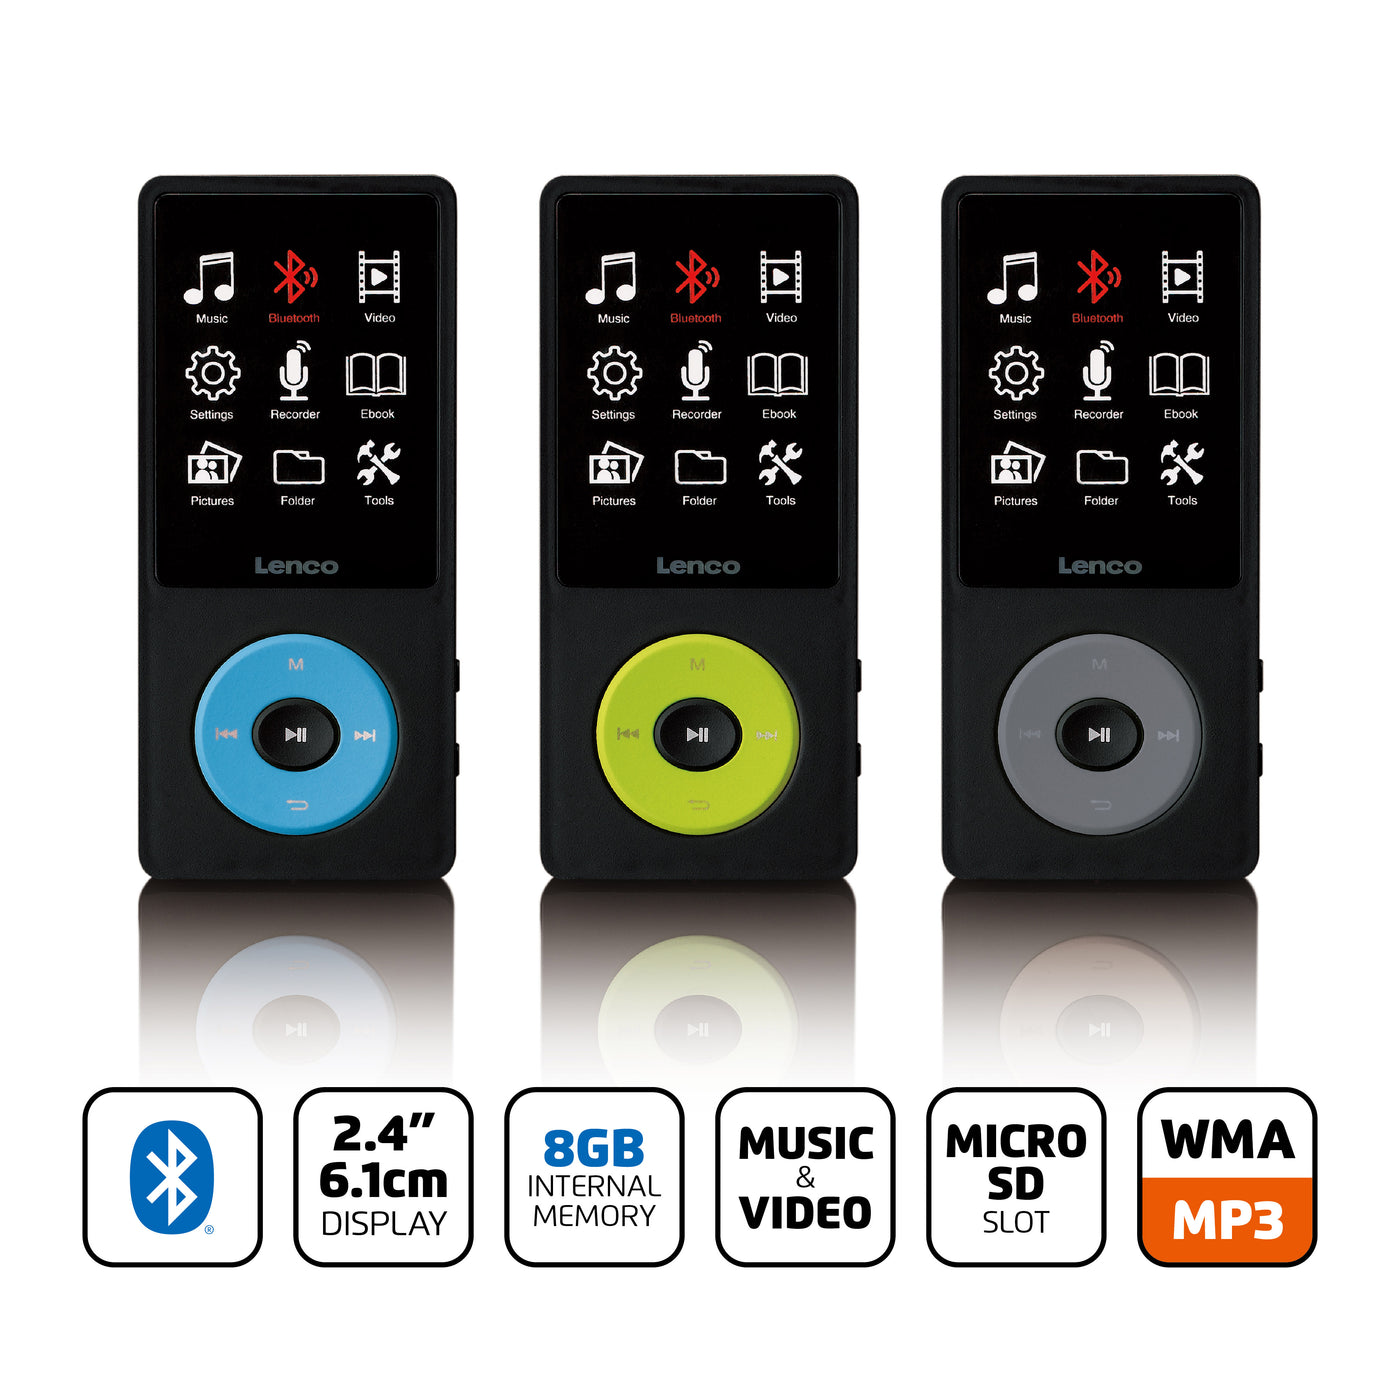 LENCO Xemio-860BK - MP3/MP4 player with Bluetooth® and 8GB internal memory - Black